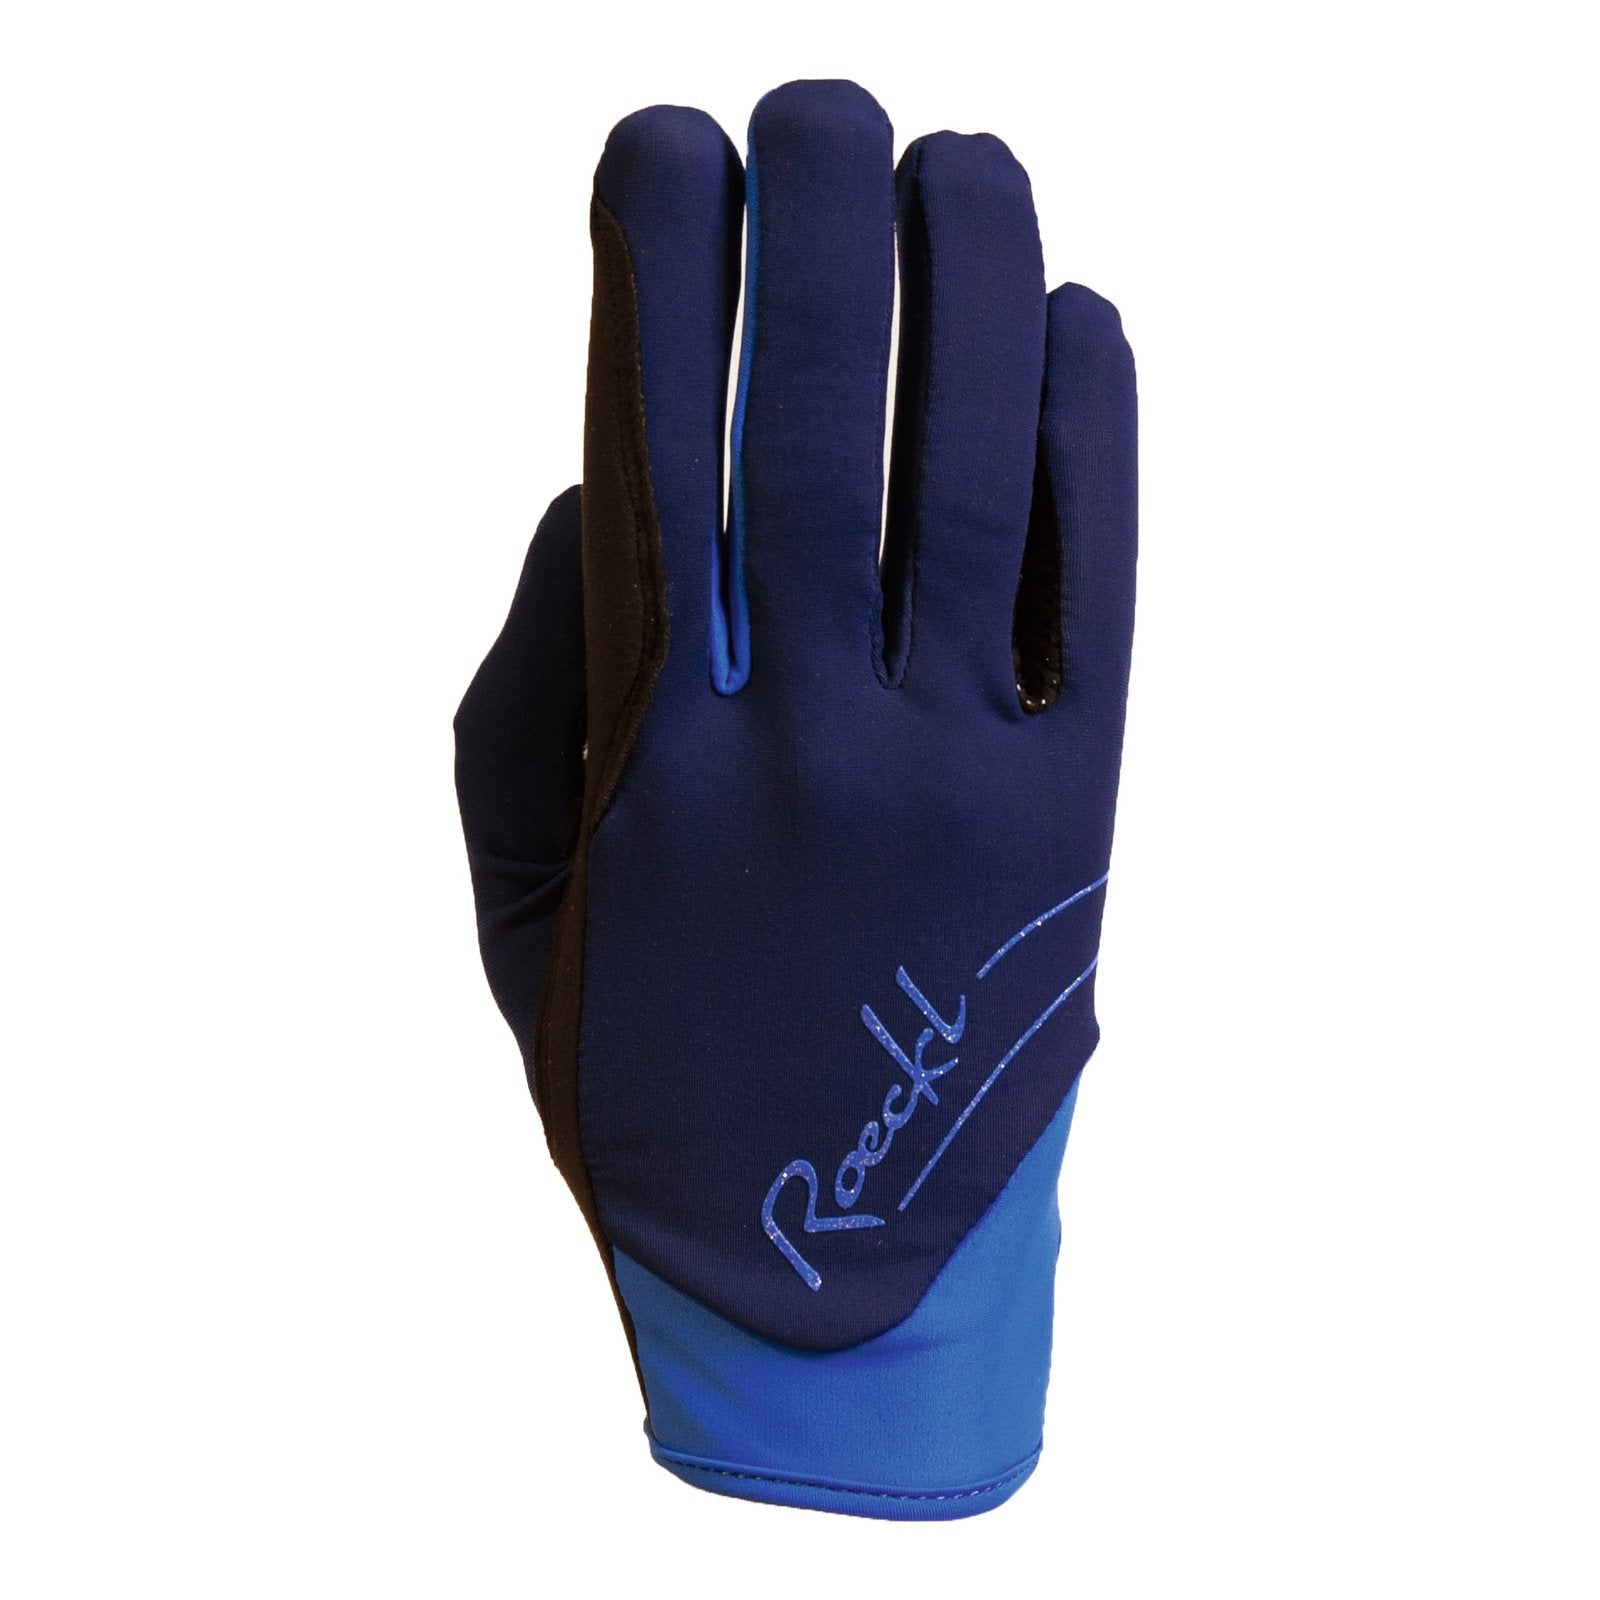 Roeckl Handschuhe June bei SP-Reitsport